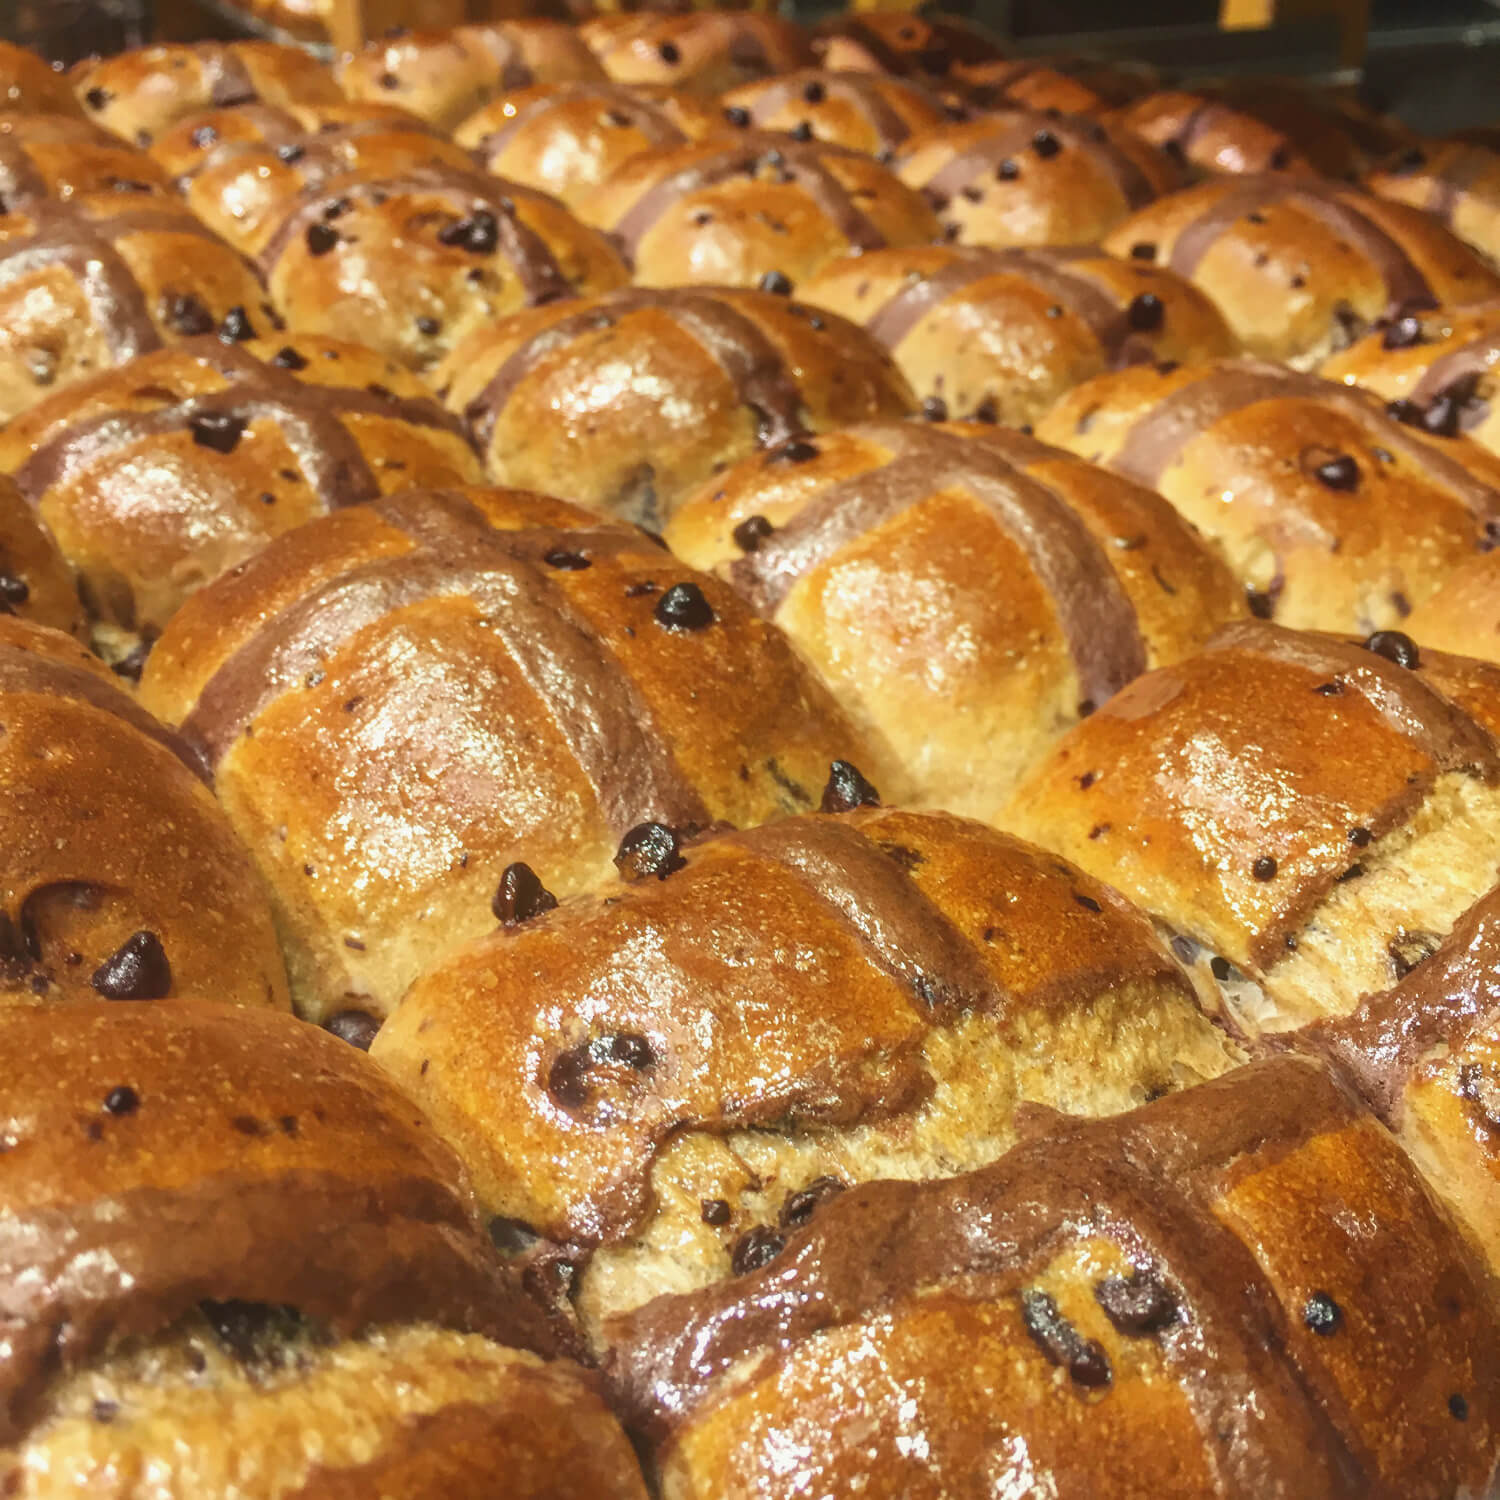 Cobs Bread Bakery - Edmonton - Hot Cross Buns